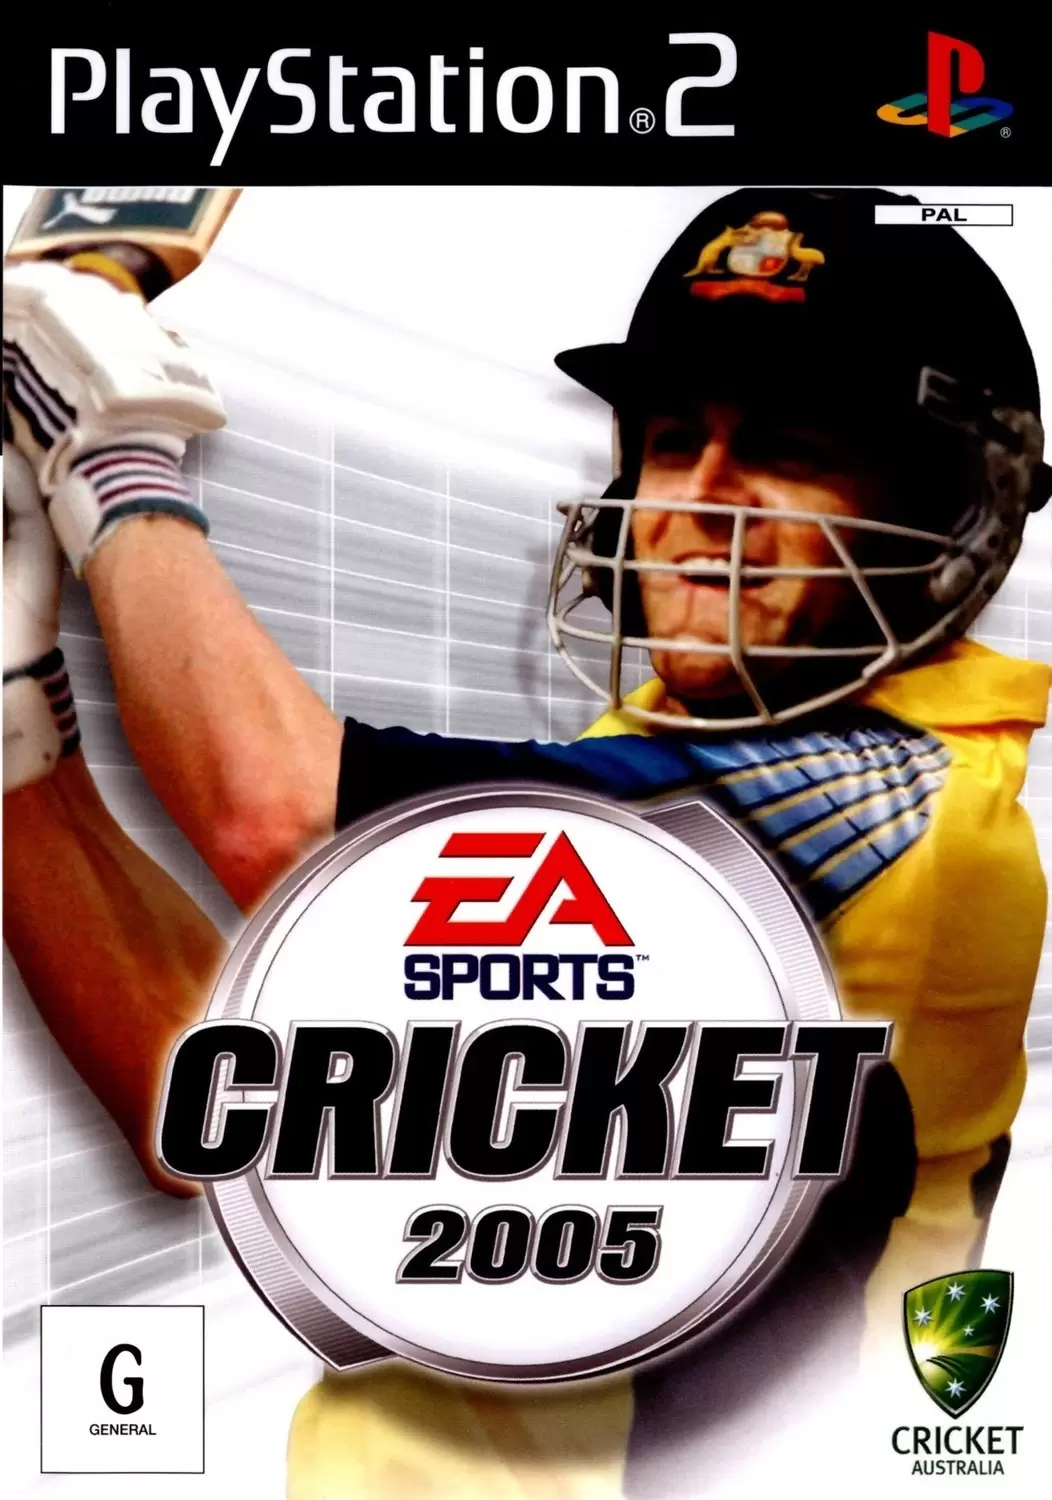 PS2 Games - Cricket 2005